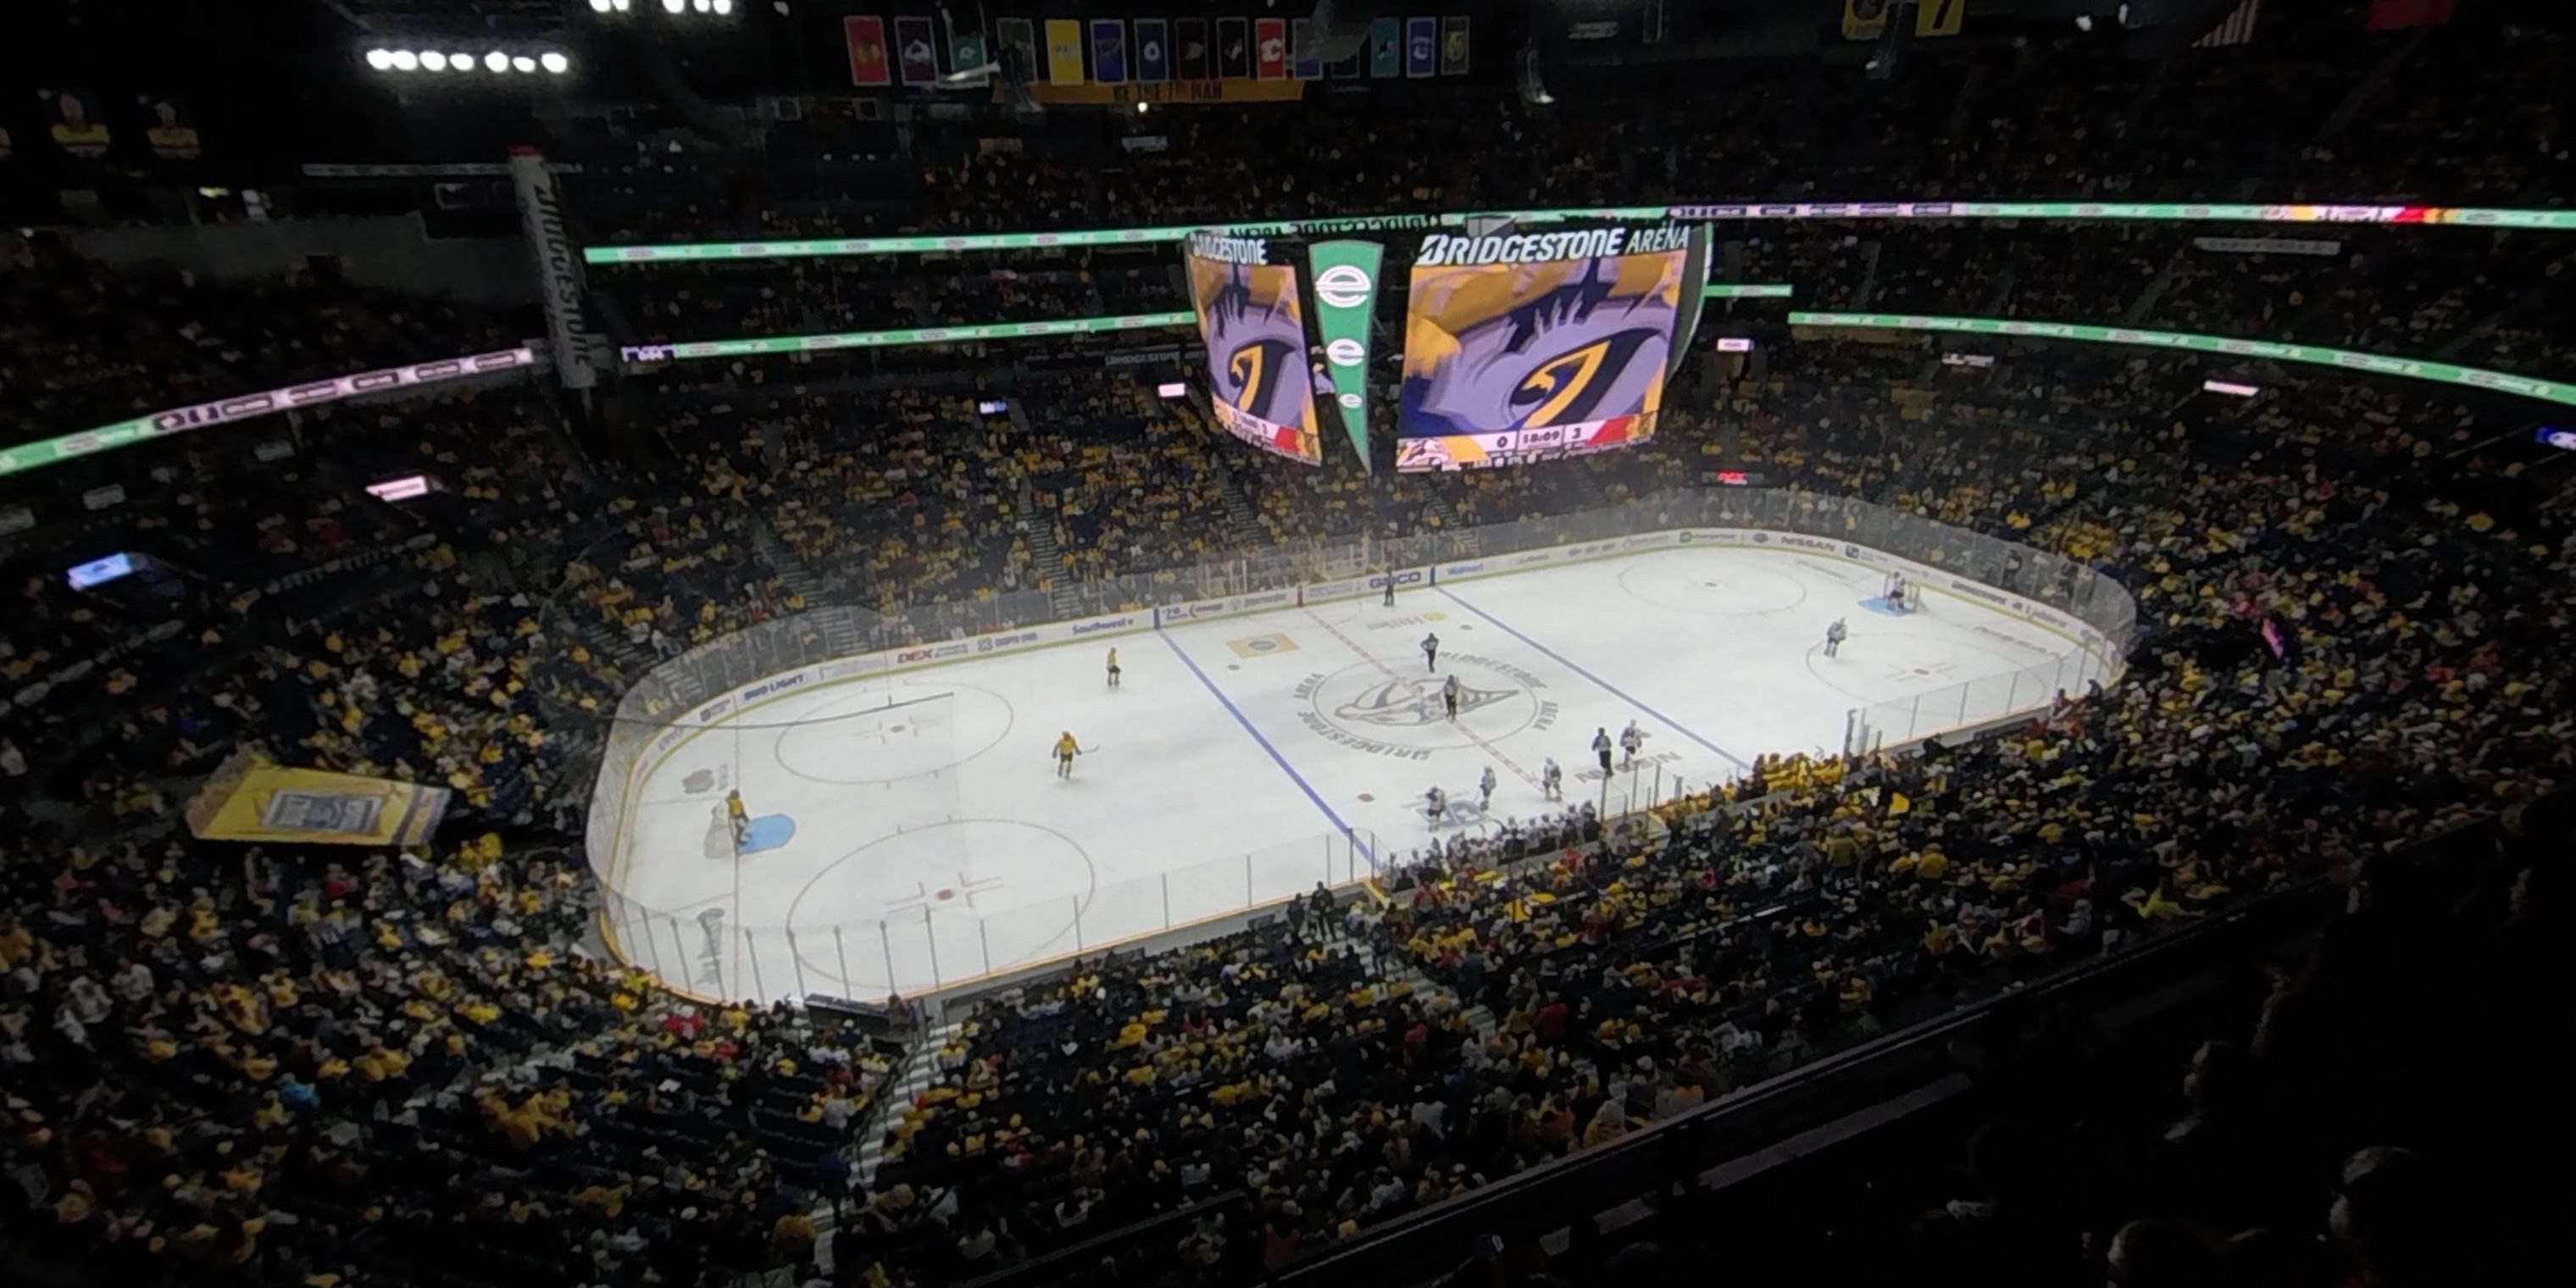 section 323 panoramic seat view  for hockey - bridgestone arena